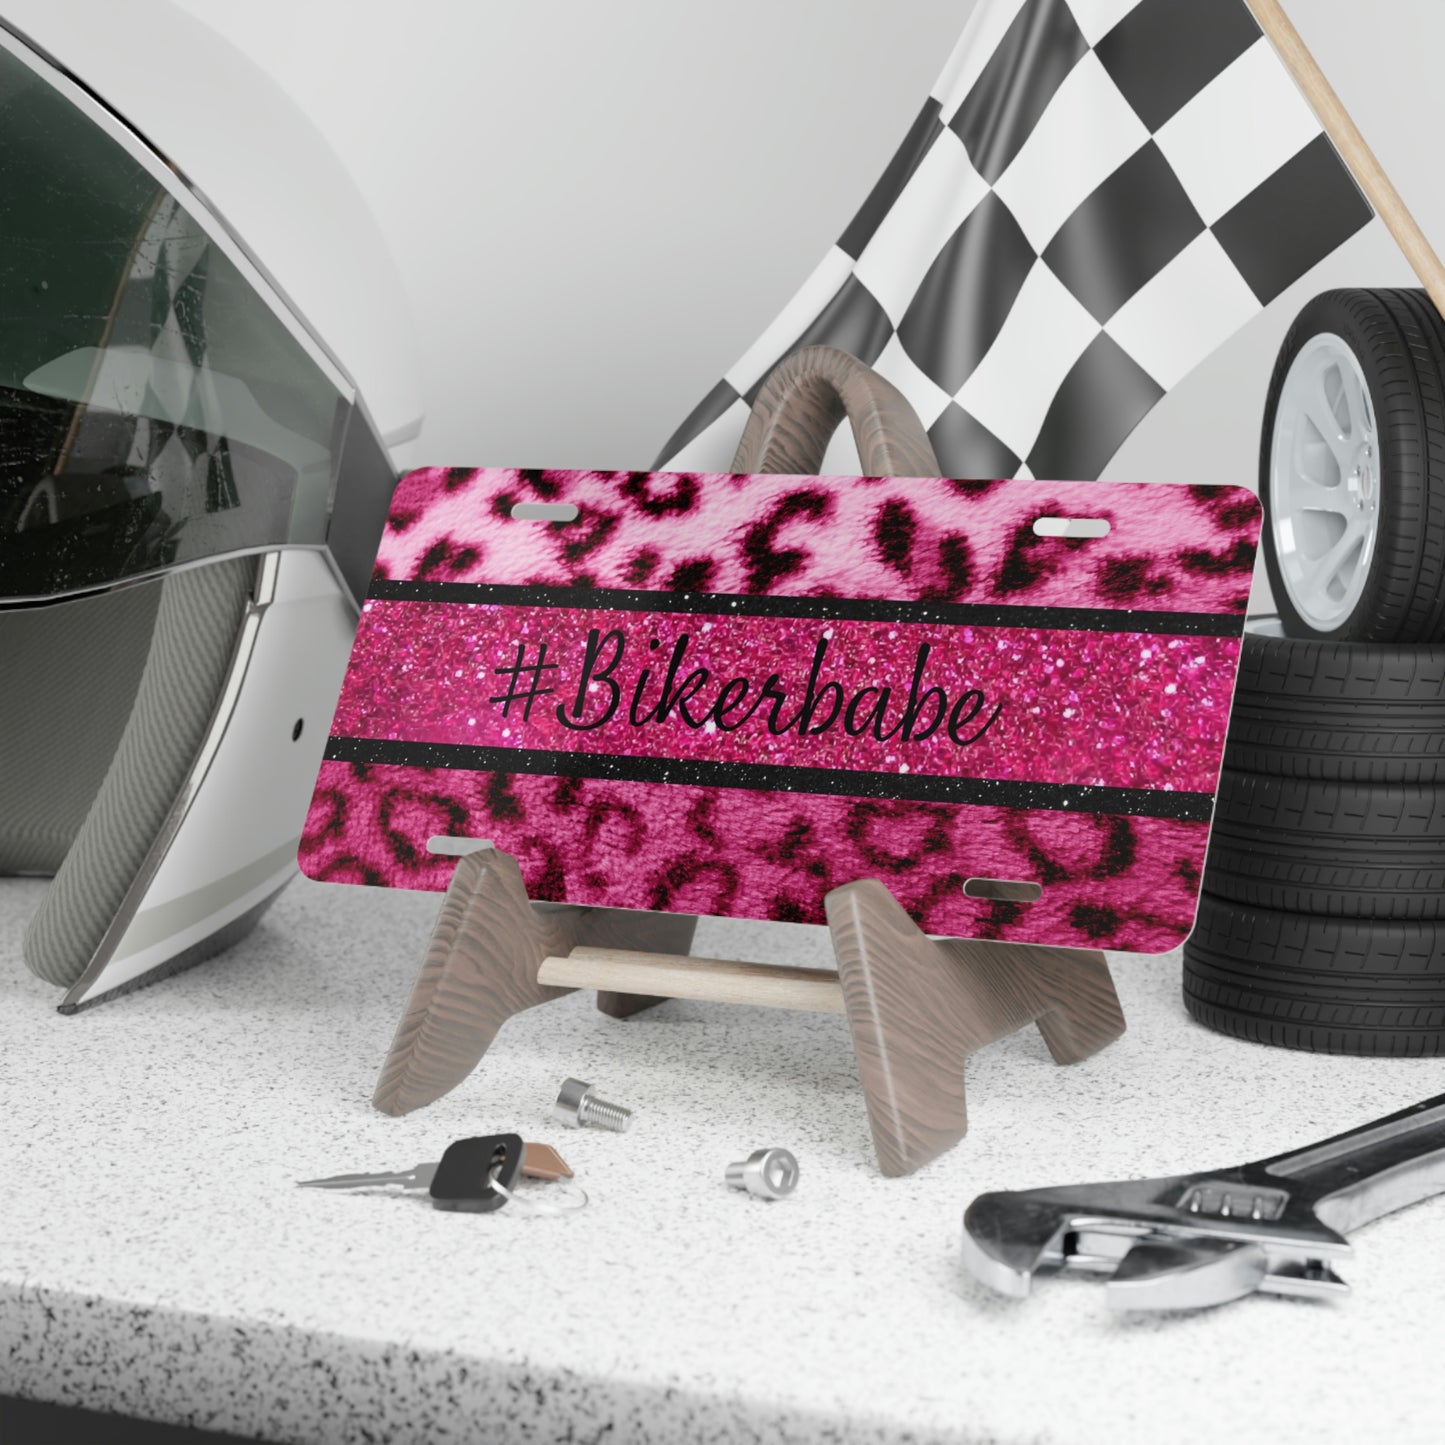 Biker Babe Pink Leopard Vanity Plate